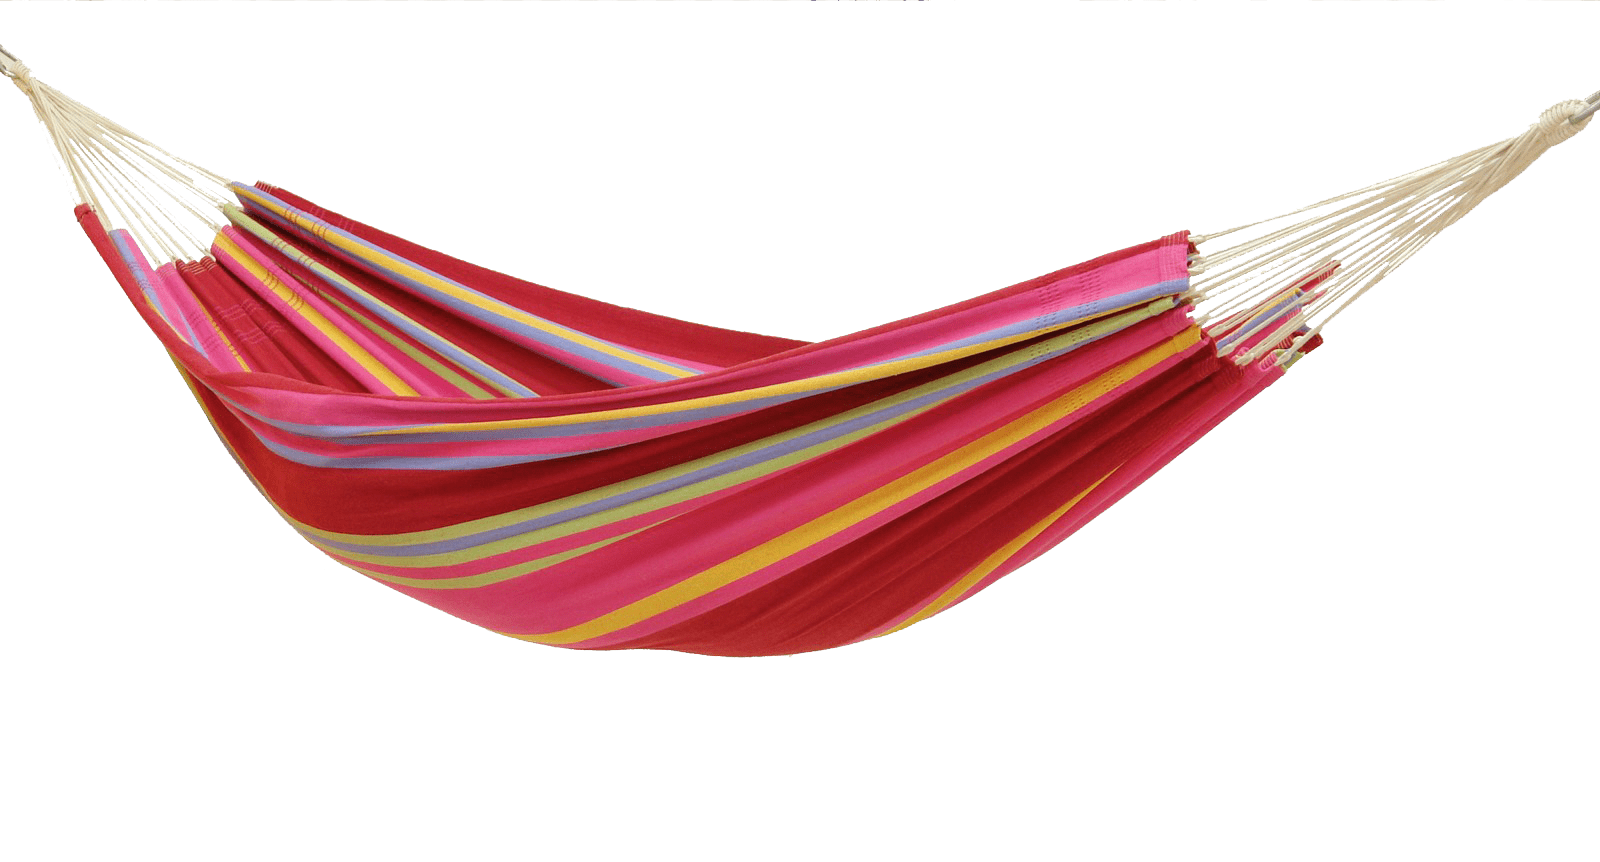 hammock clipart transparent background